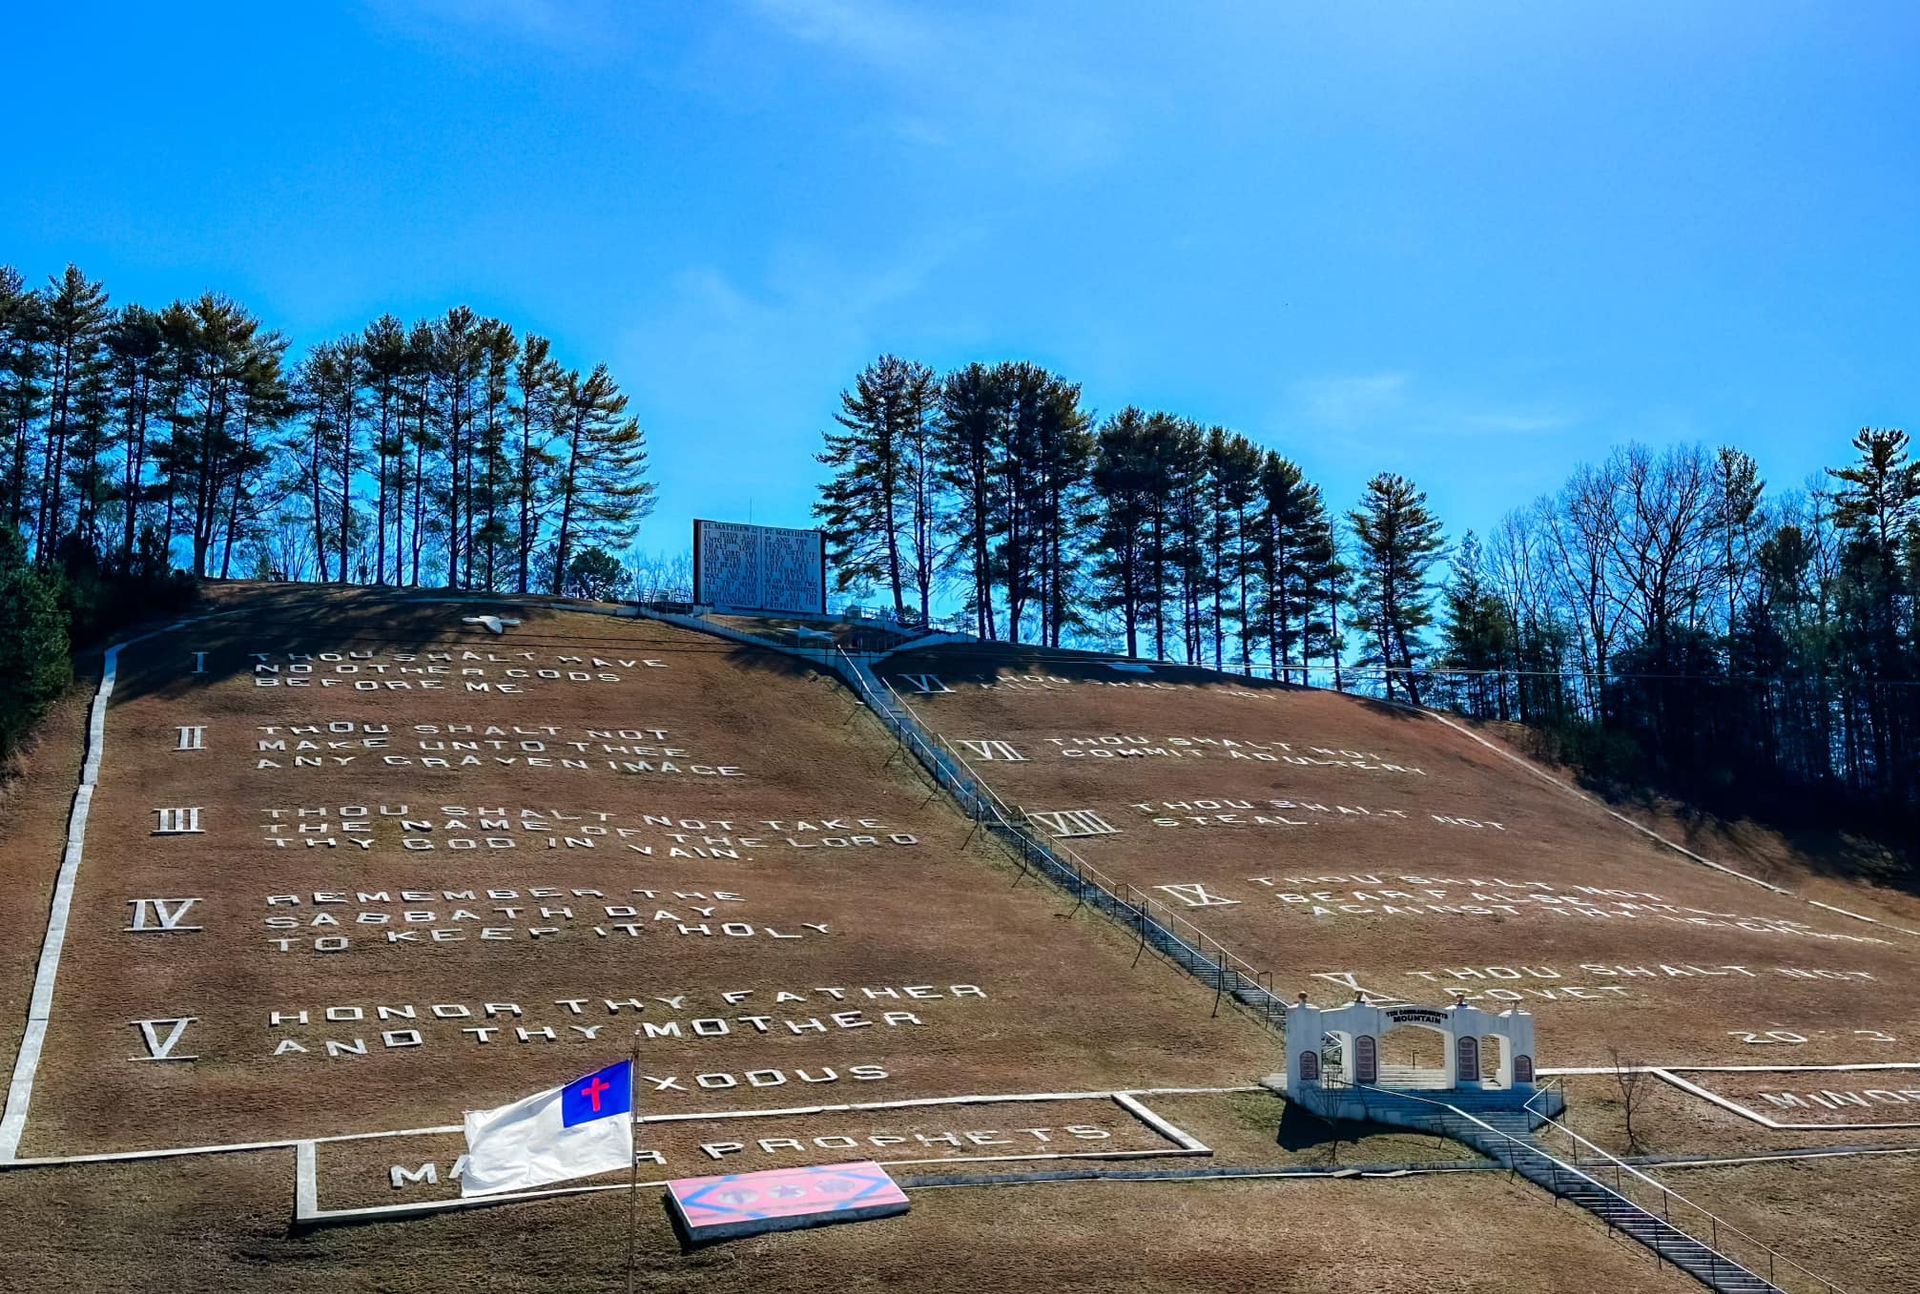 
World's Largest Ten Commandments, world record in Murphy, North Carolina